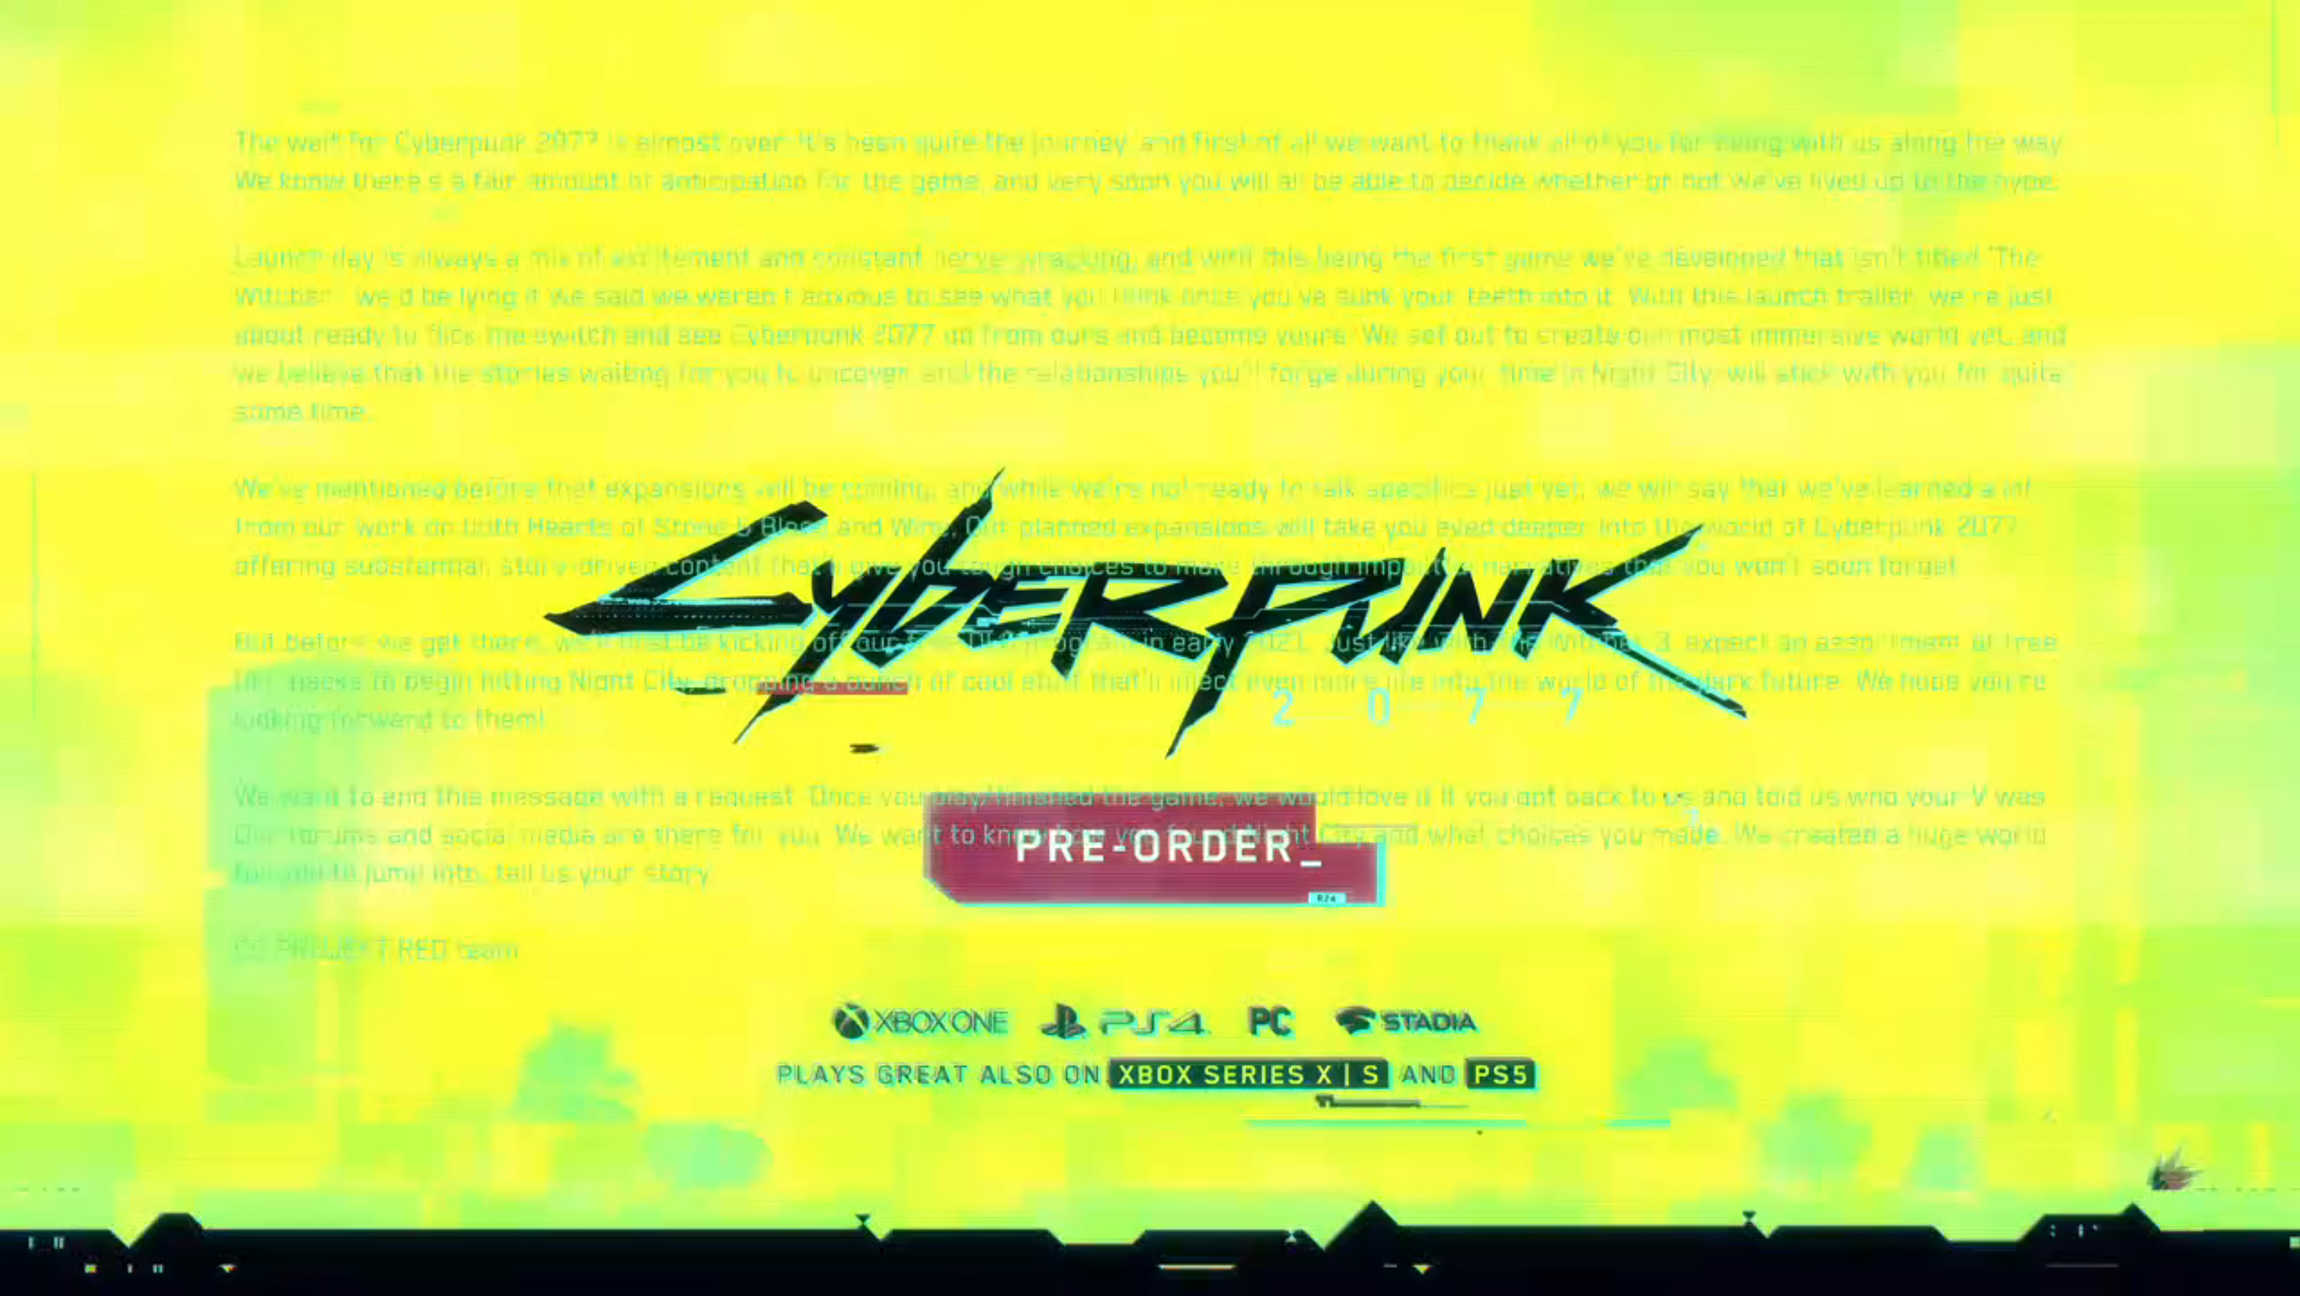 Cyberpunk 2077 Free DLC starts early 2021 says secret message